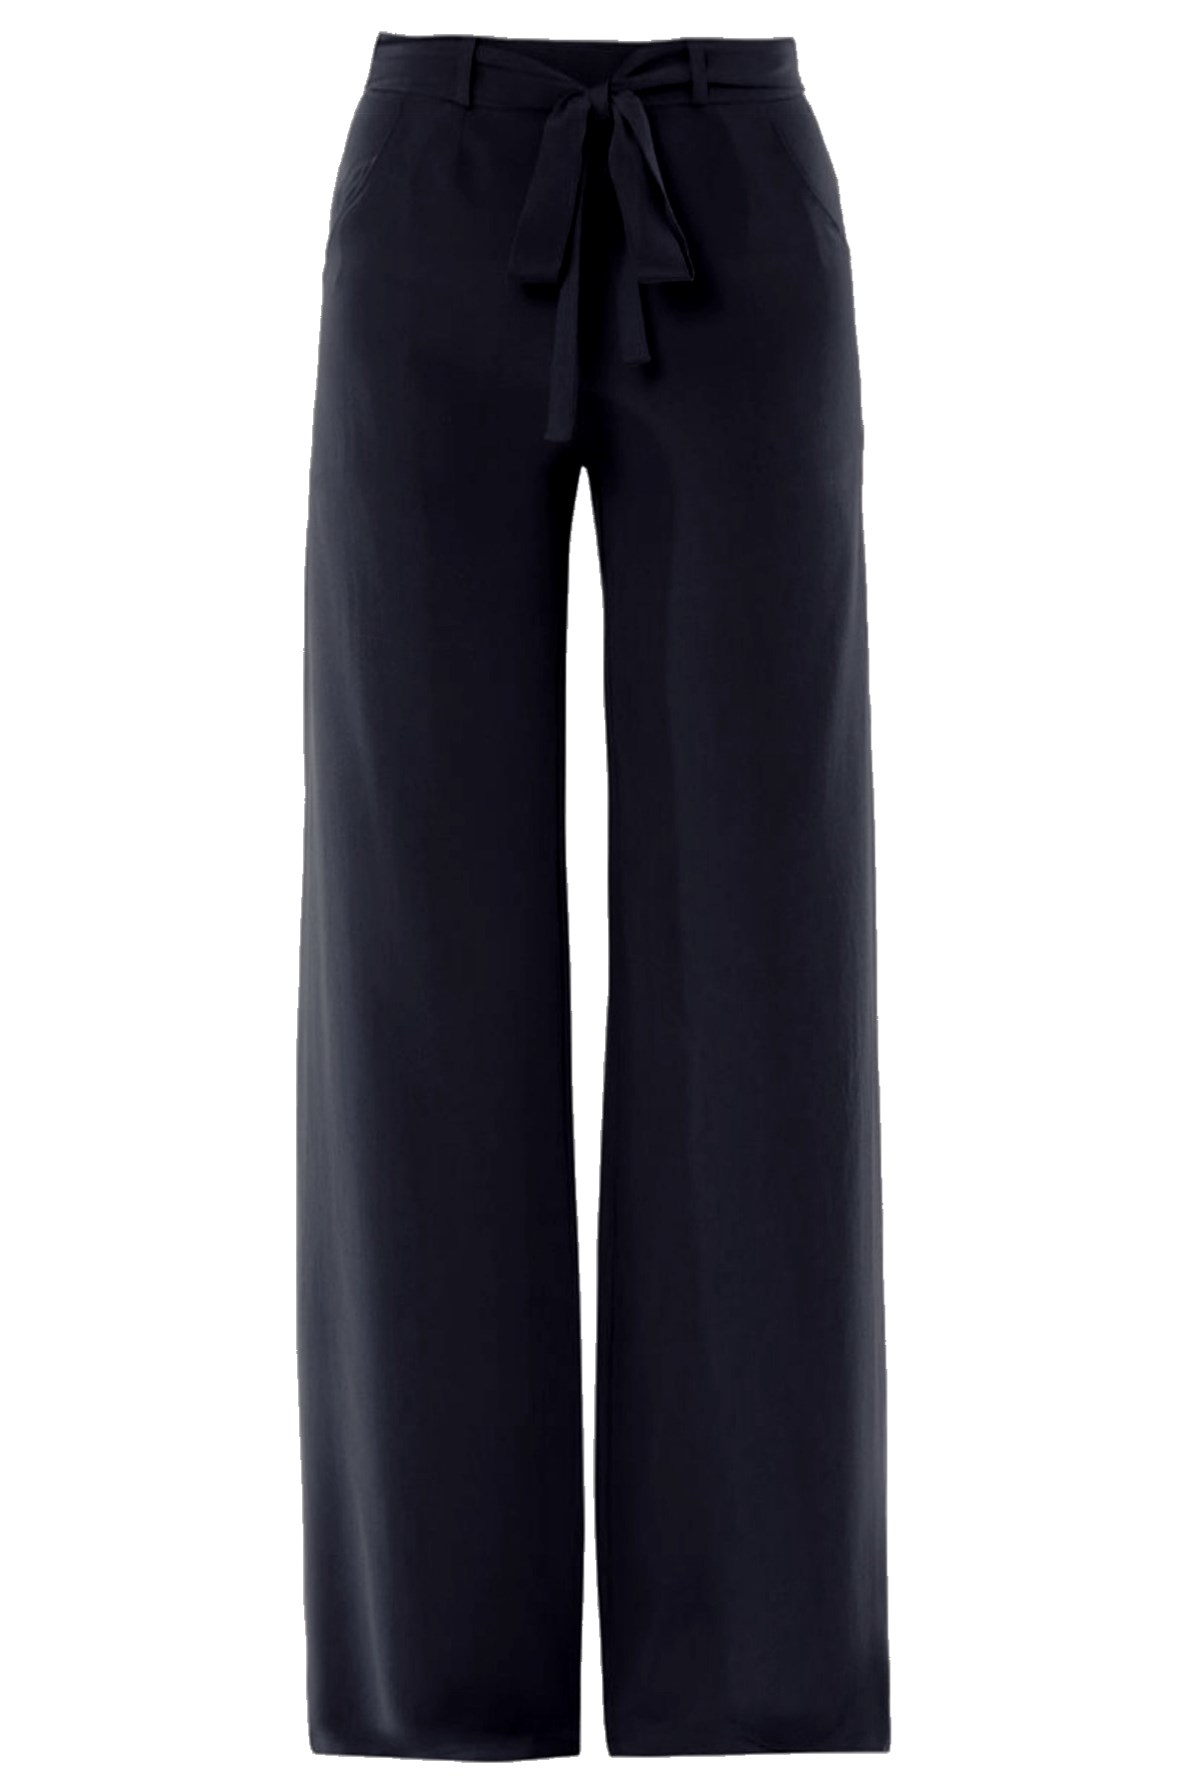 Great Deals Trouser Suit in Black Silk Fabric LSTV113226